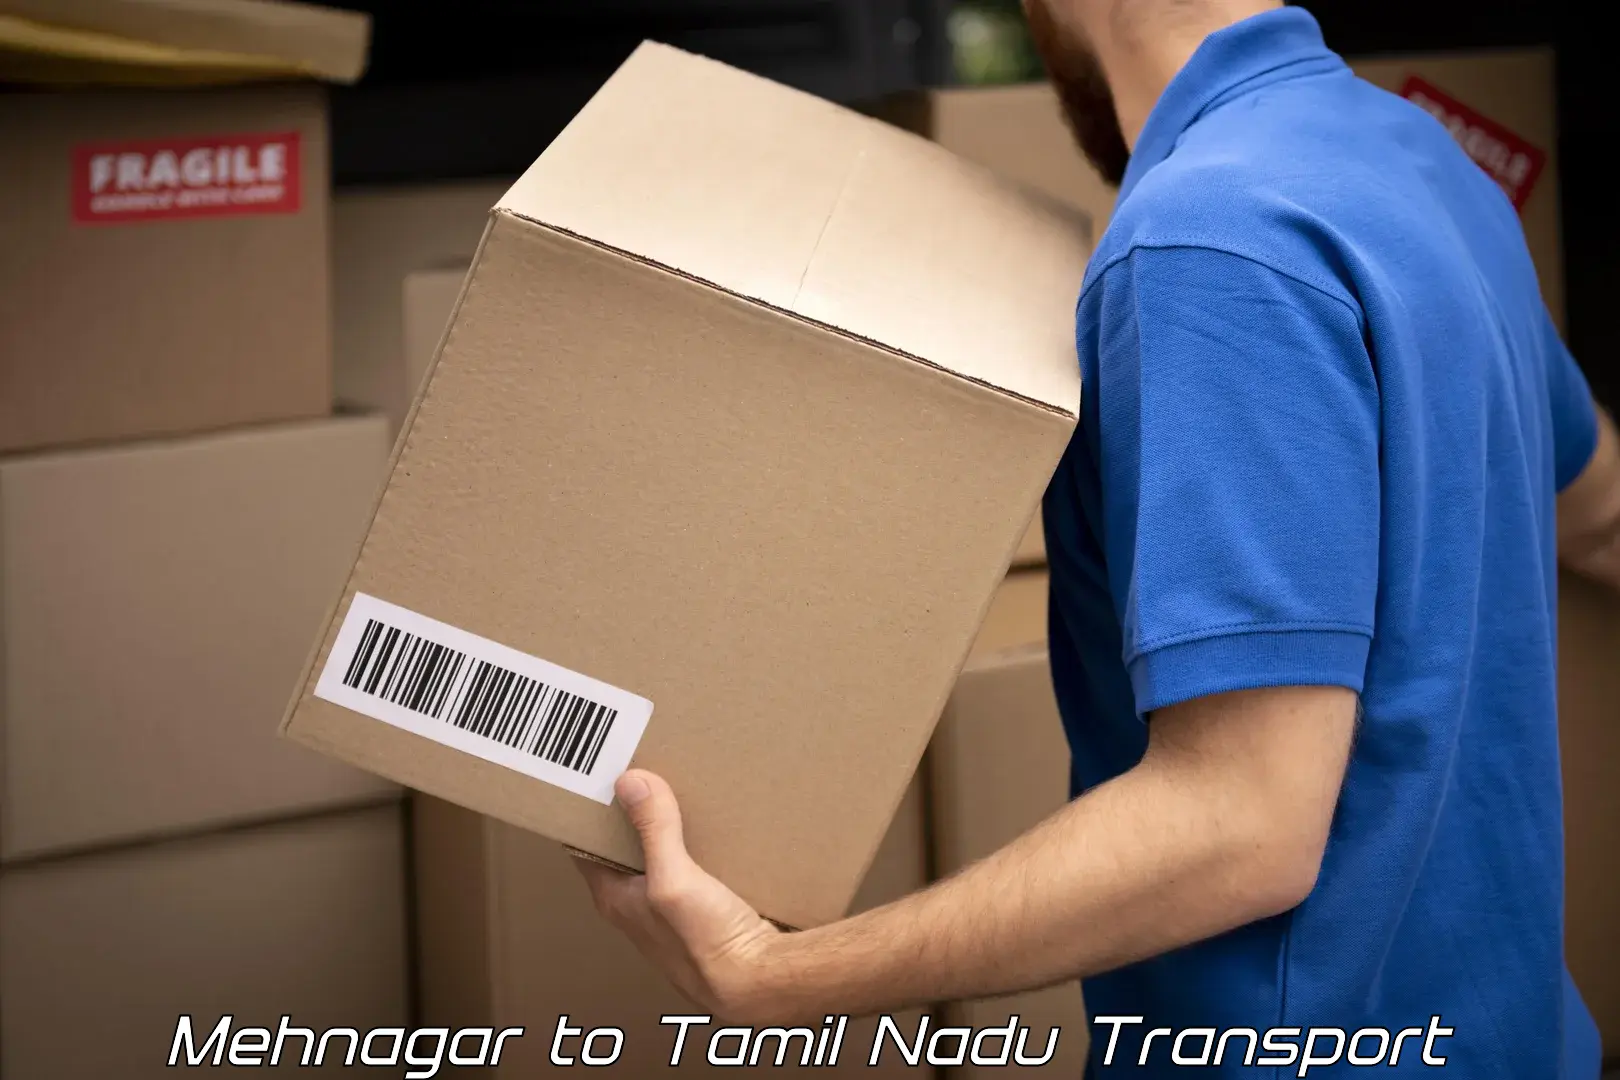 Cycle transportation service Mehnagar to Tamil Nadu